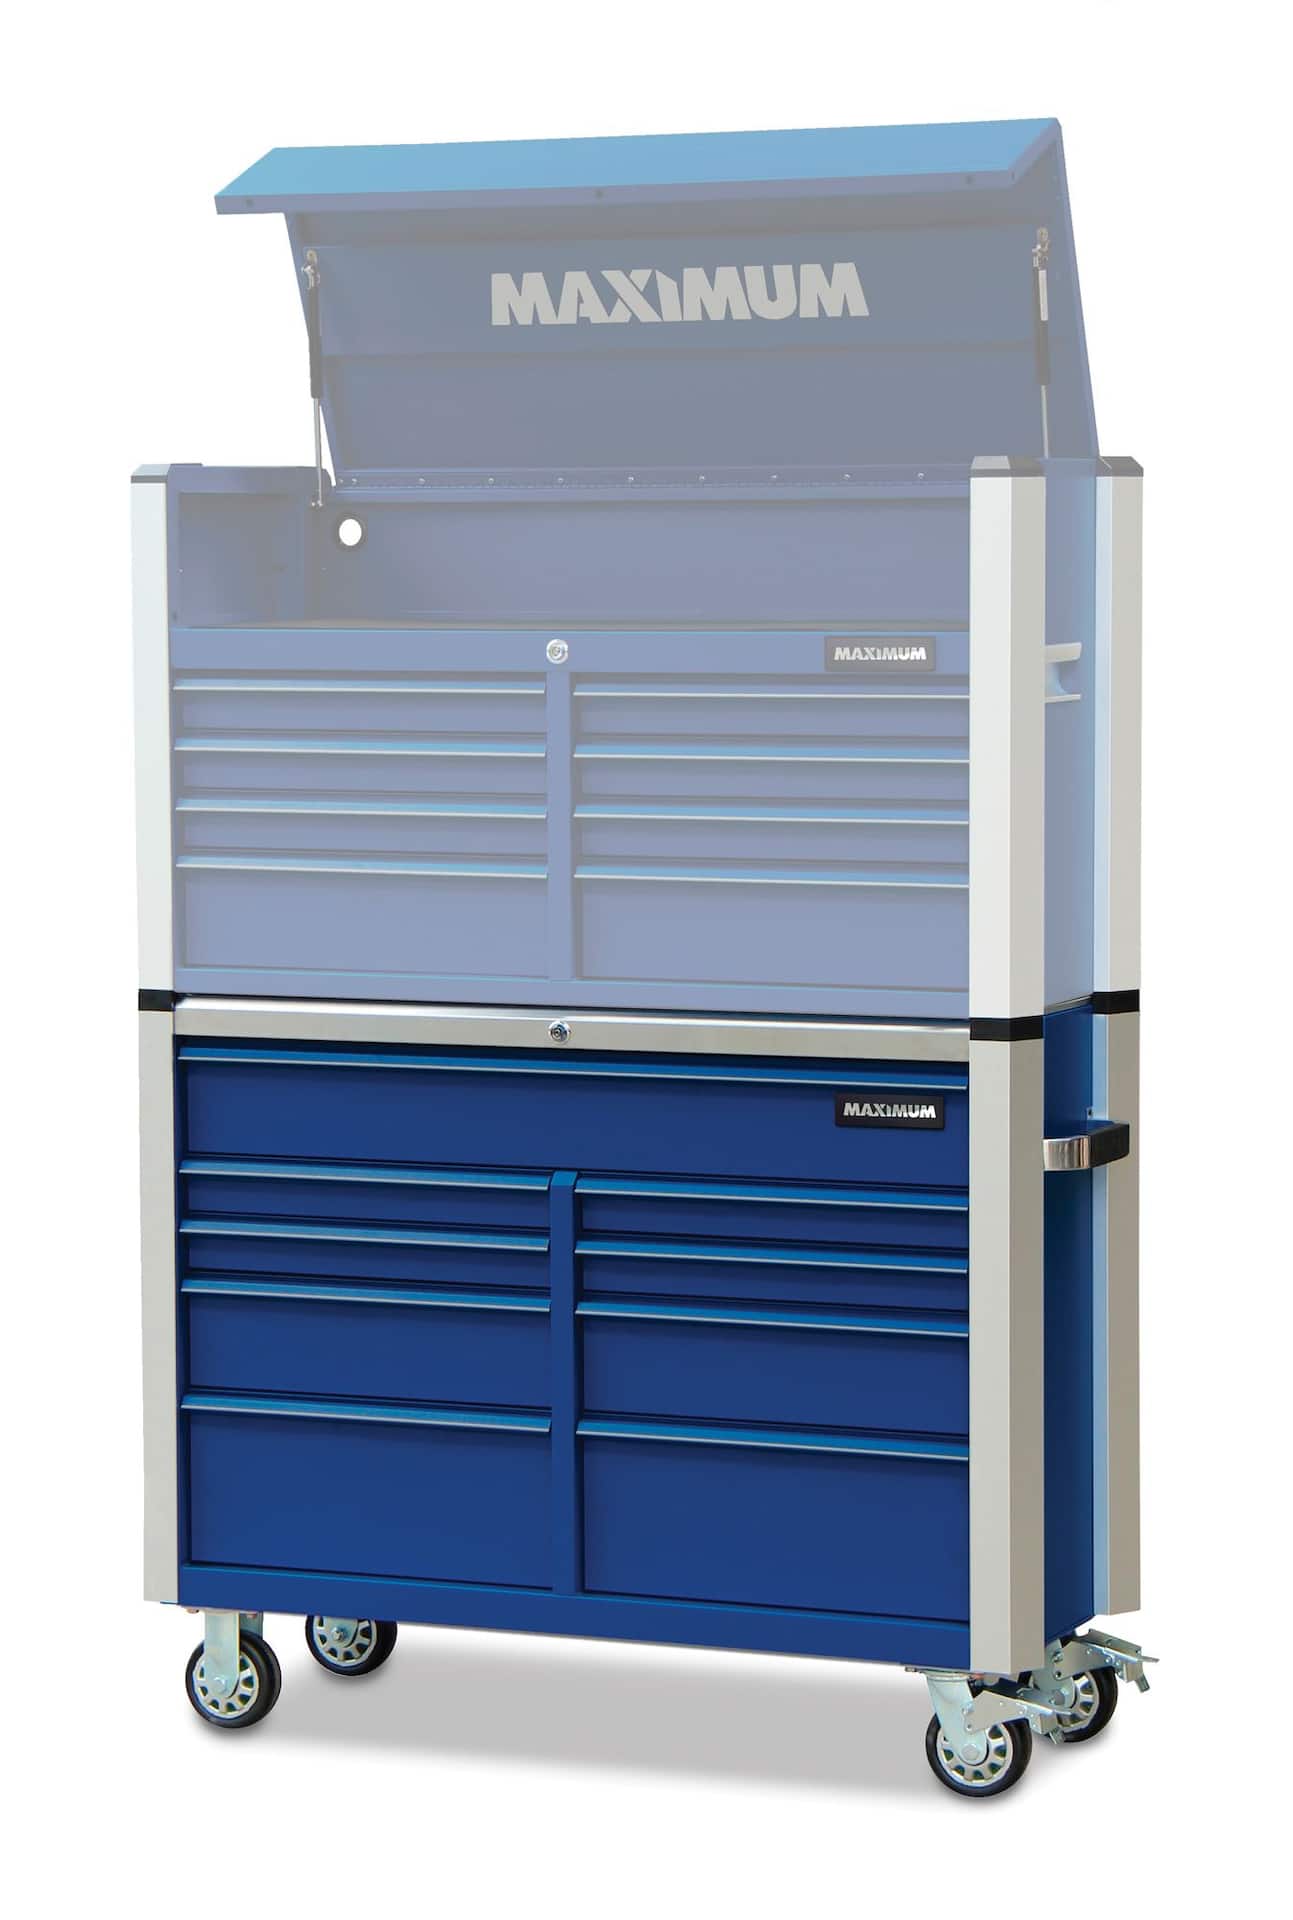 MAXIMUM 9-Drawer Cabinet, Blue, 47-in